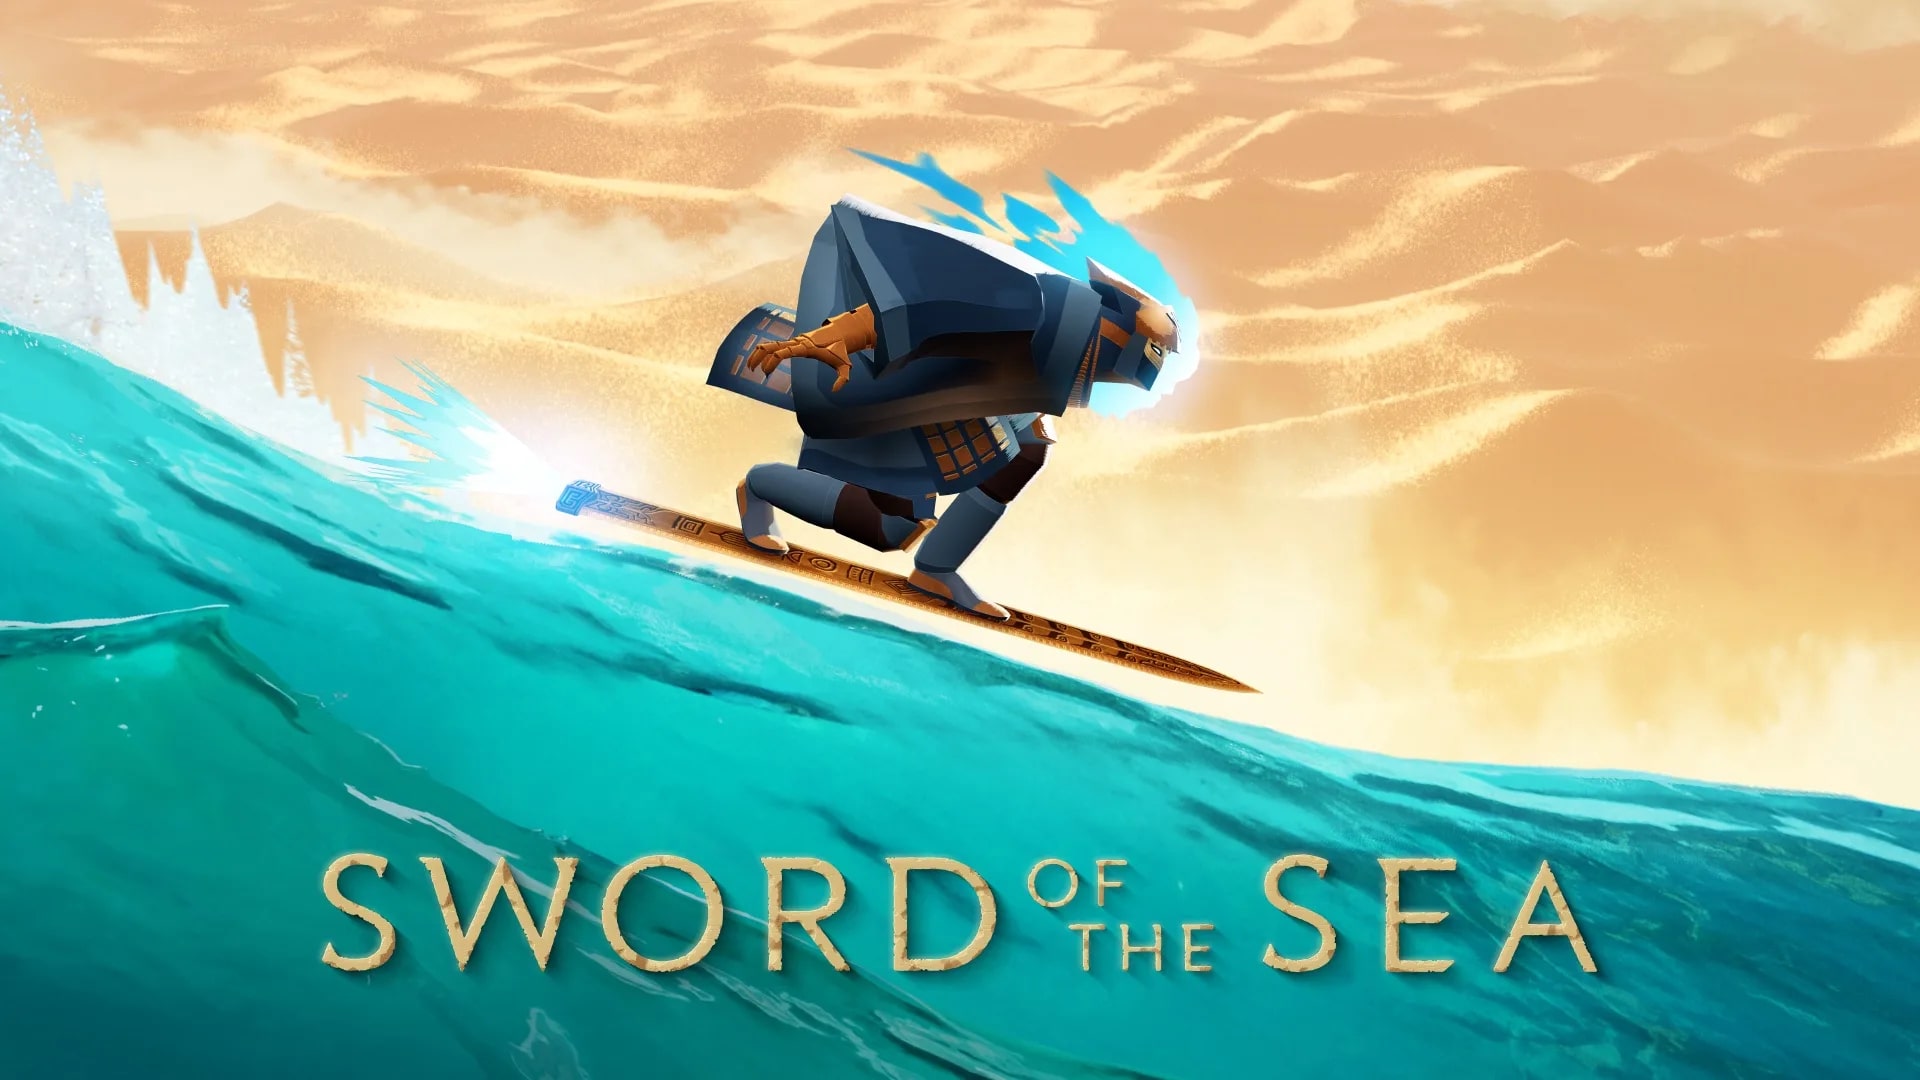 Sword of the sea 6